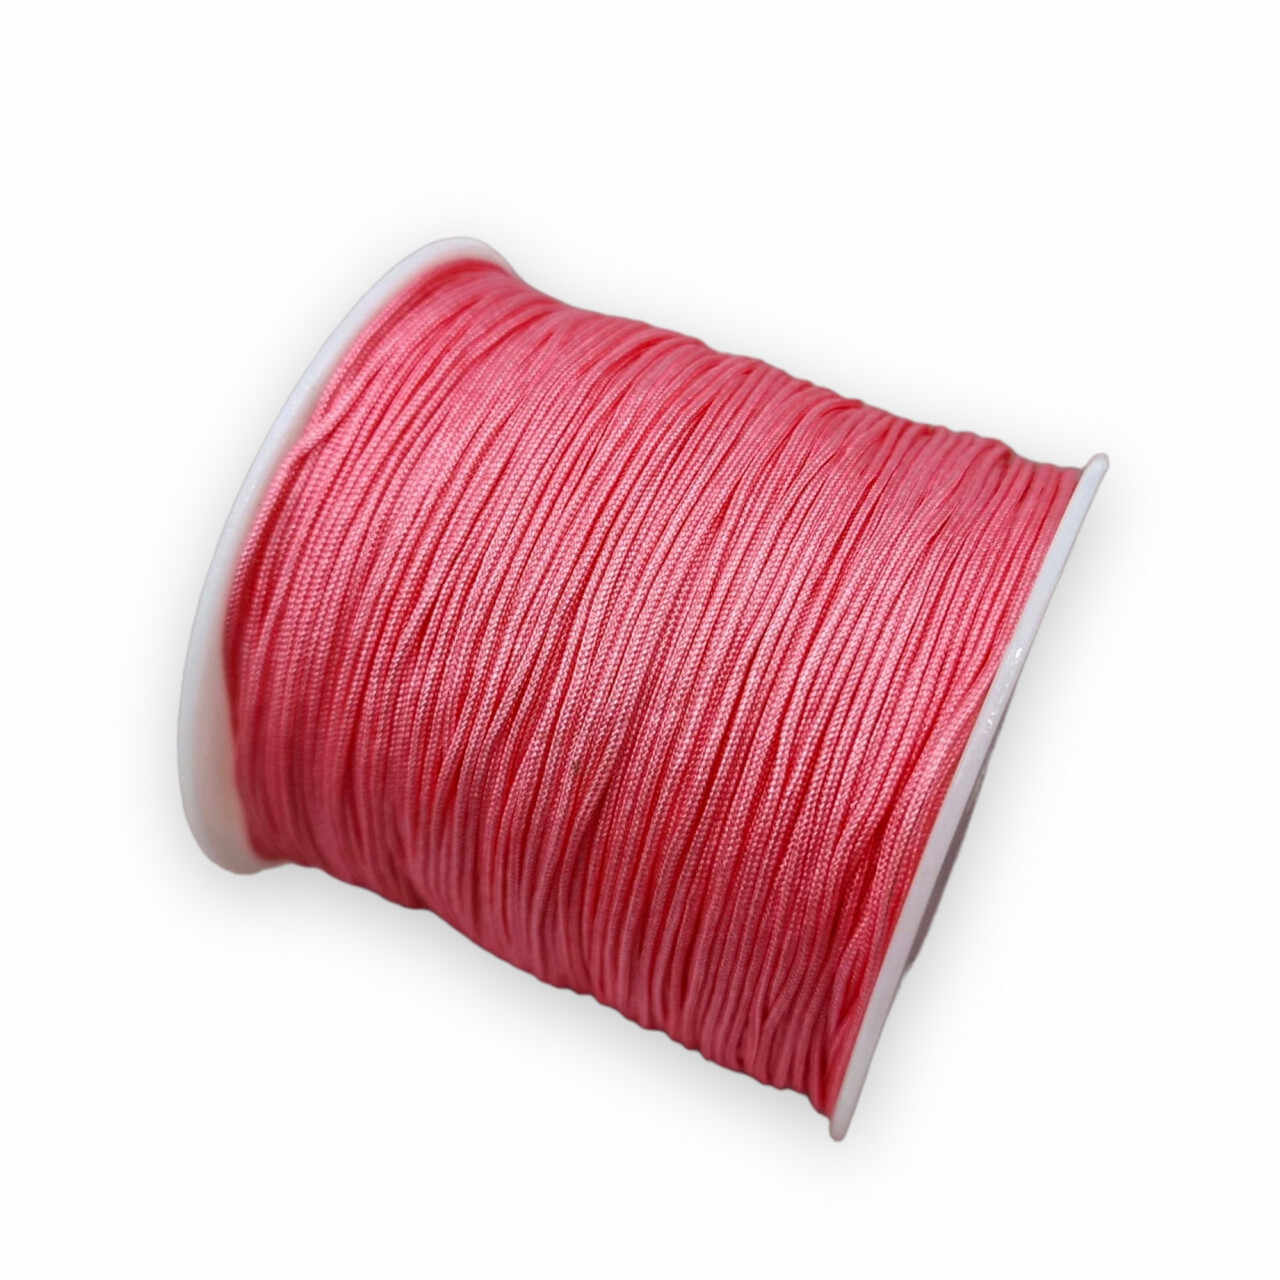 Rola snur 100m x 0.8mm - roz taffy